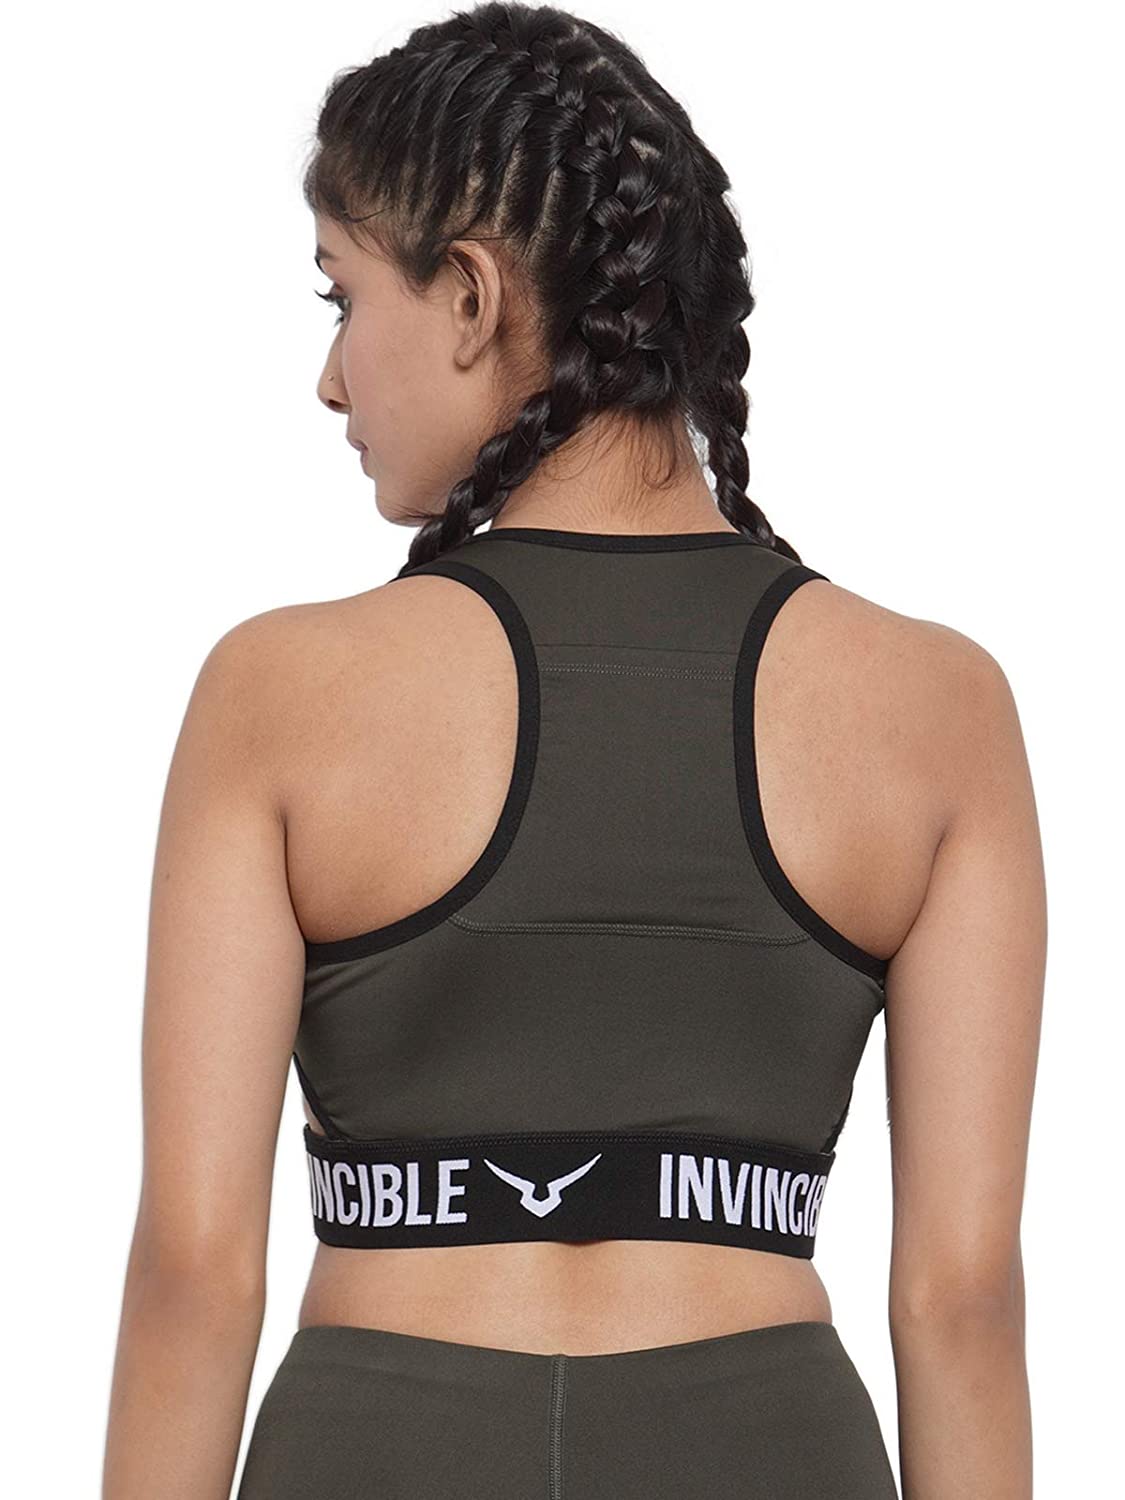 Invincible Women's Functional Pocket Sports Bra